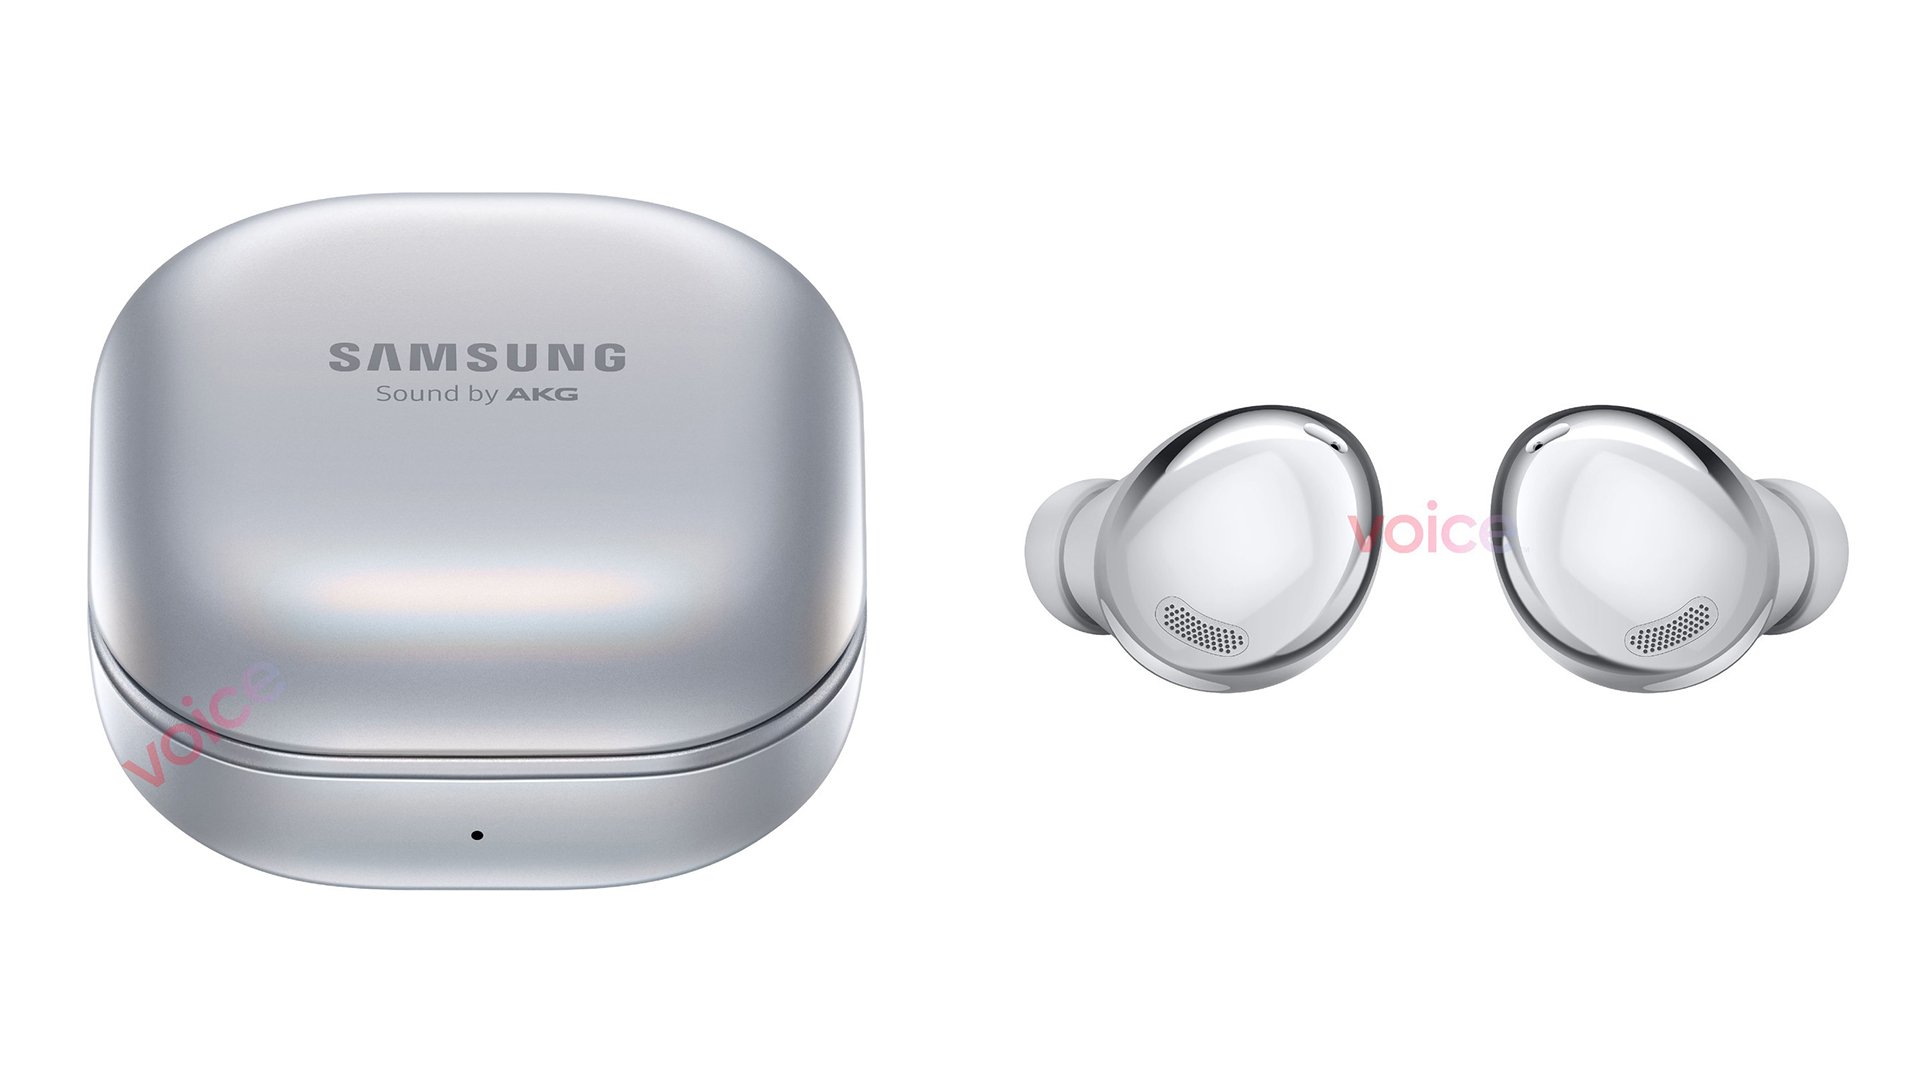 Galaxy Buds Pro wireless earbuds now appear in Phantom Silver